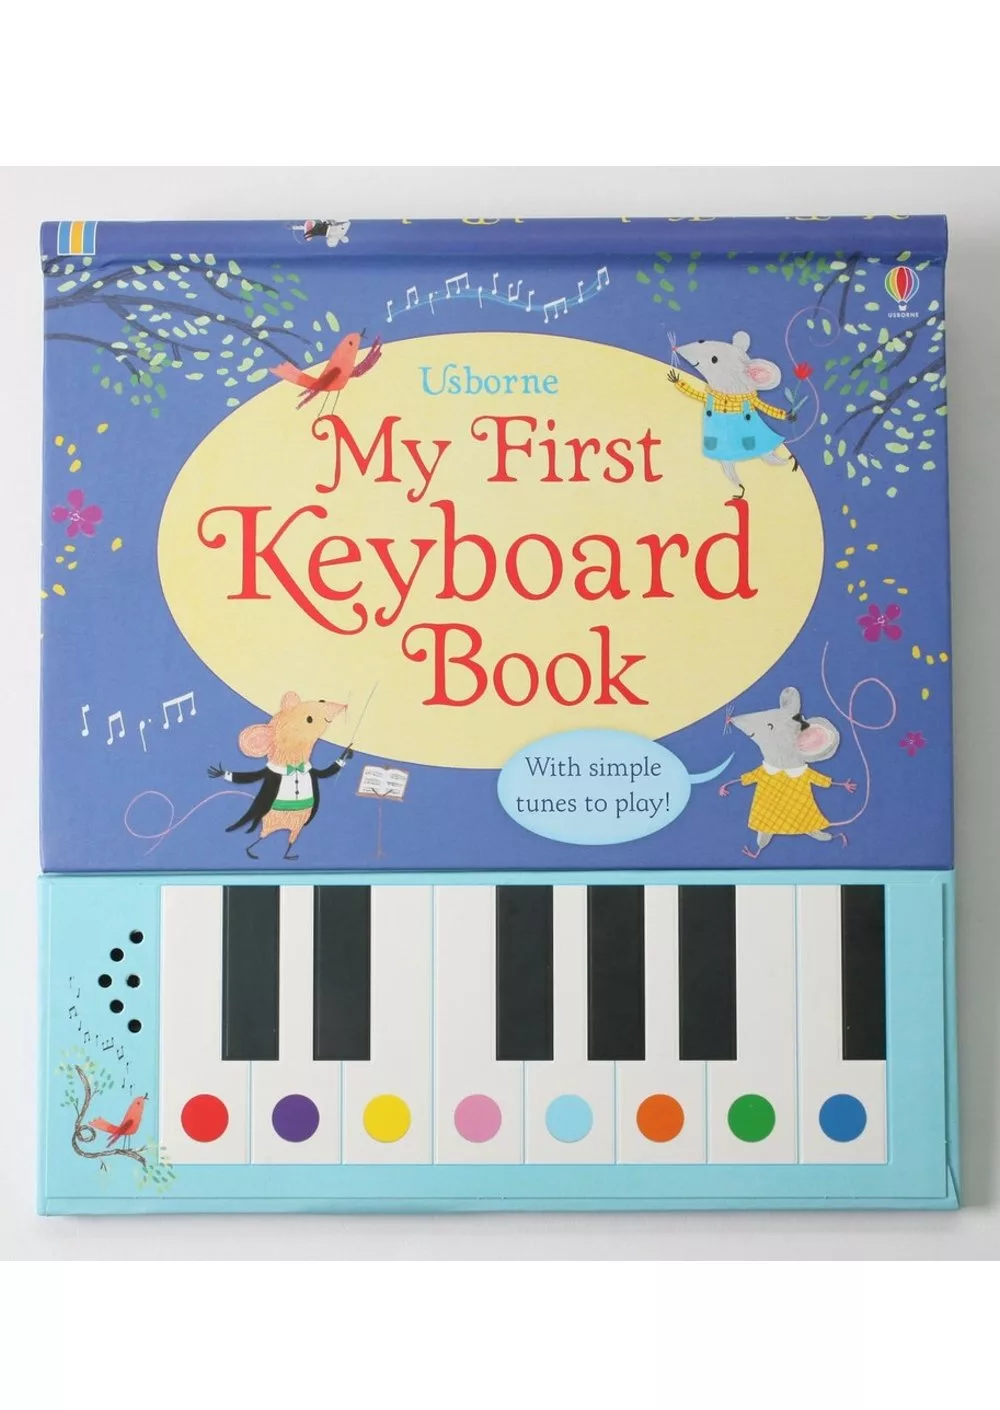 My first keyboard book